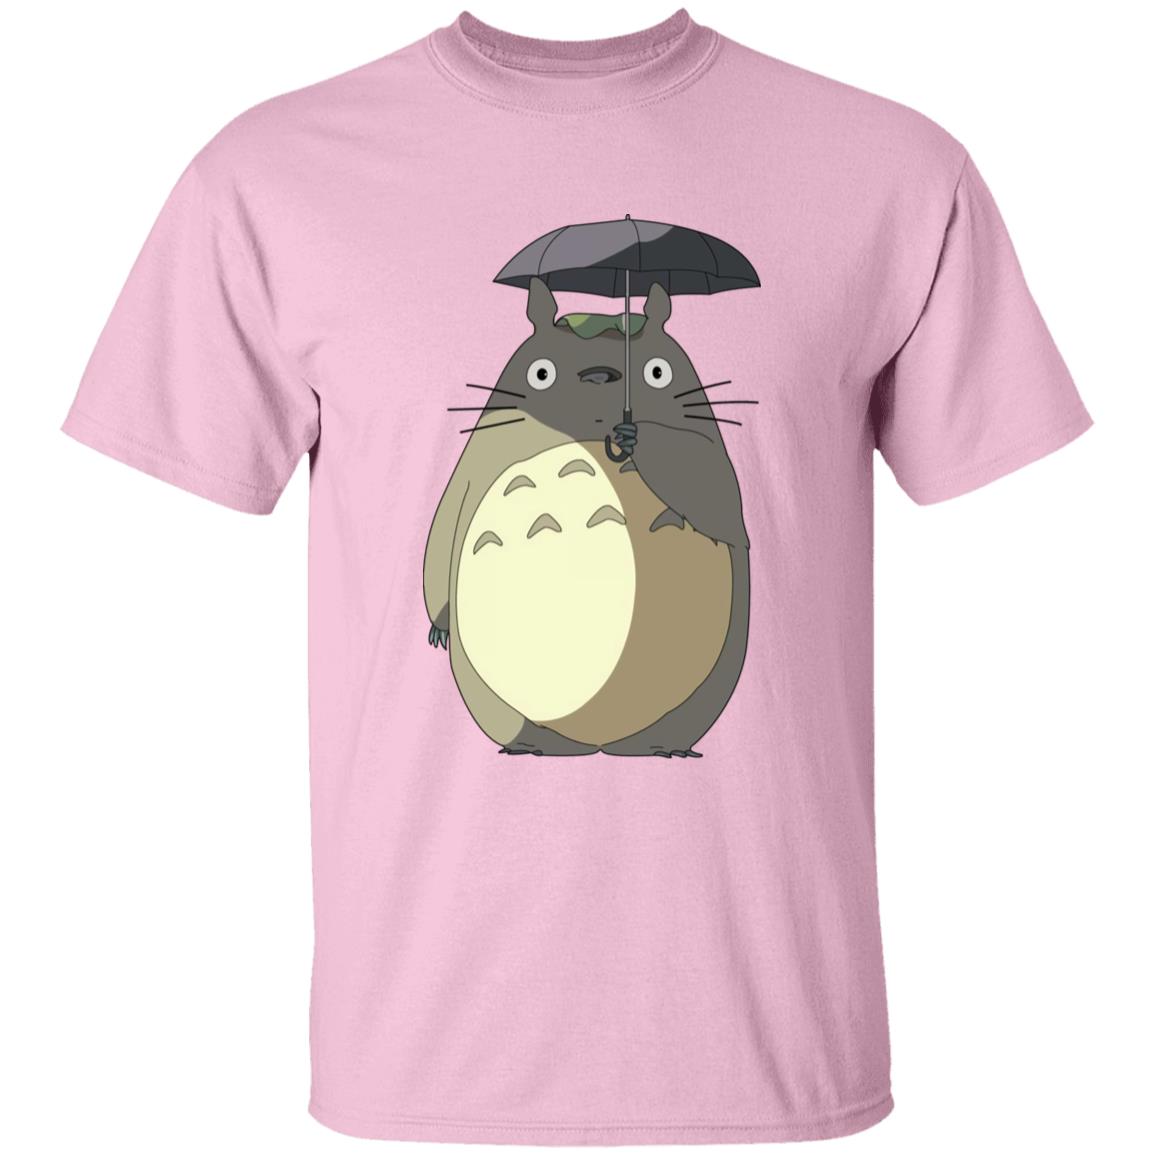 Totoro and Umbrella T Shirt Ghibli Store ghibli.store